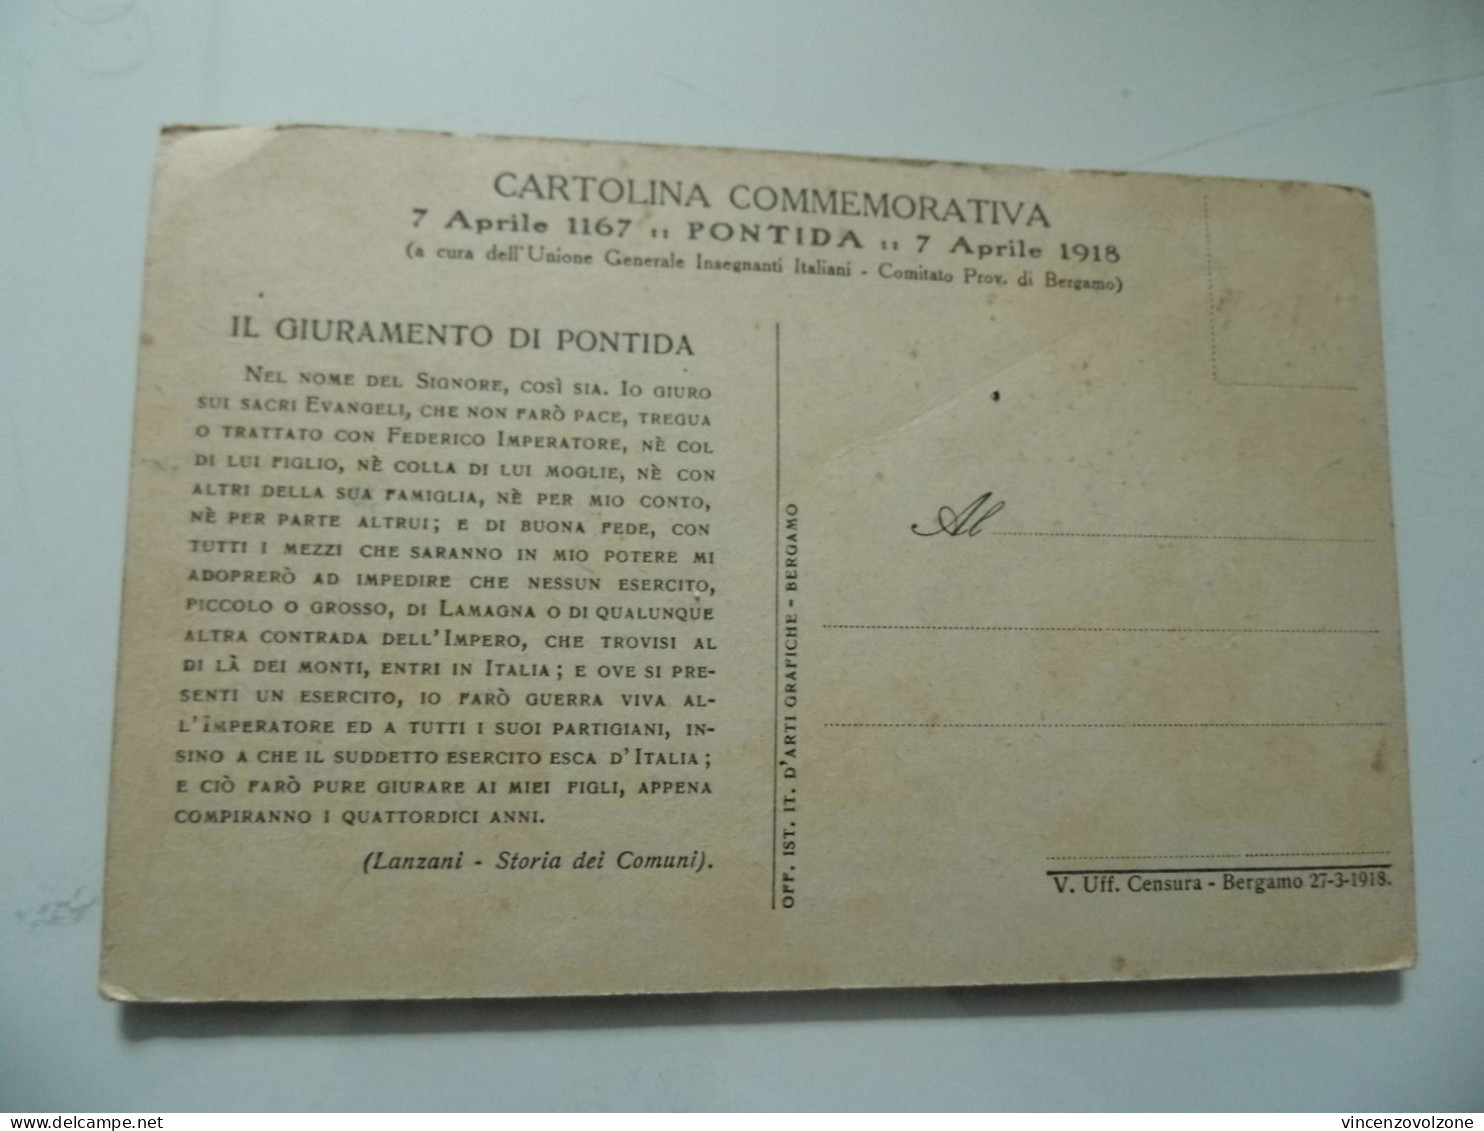 Cartolina "CARTOLINA COMMEMORATIVA GIURAMENTO DI PONTIDA" 1918 - Demonstrations